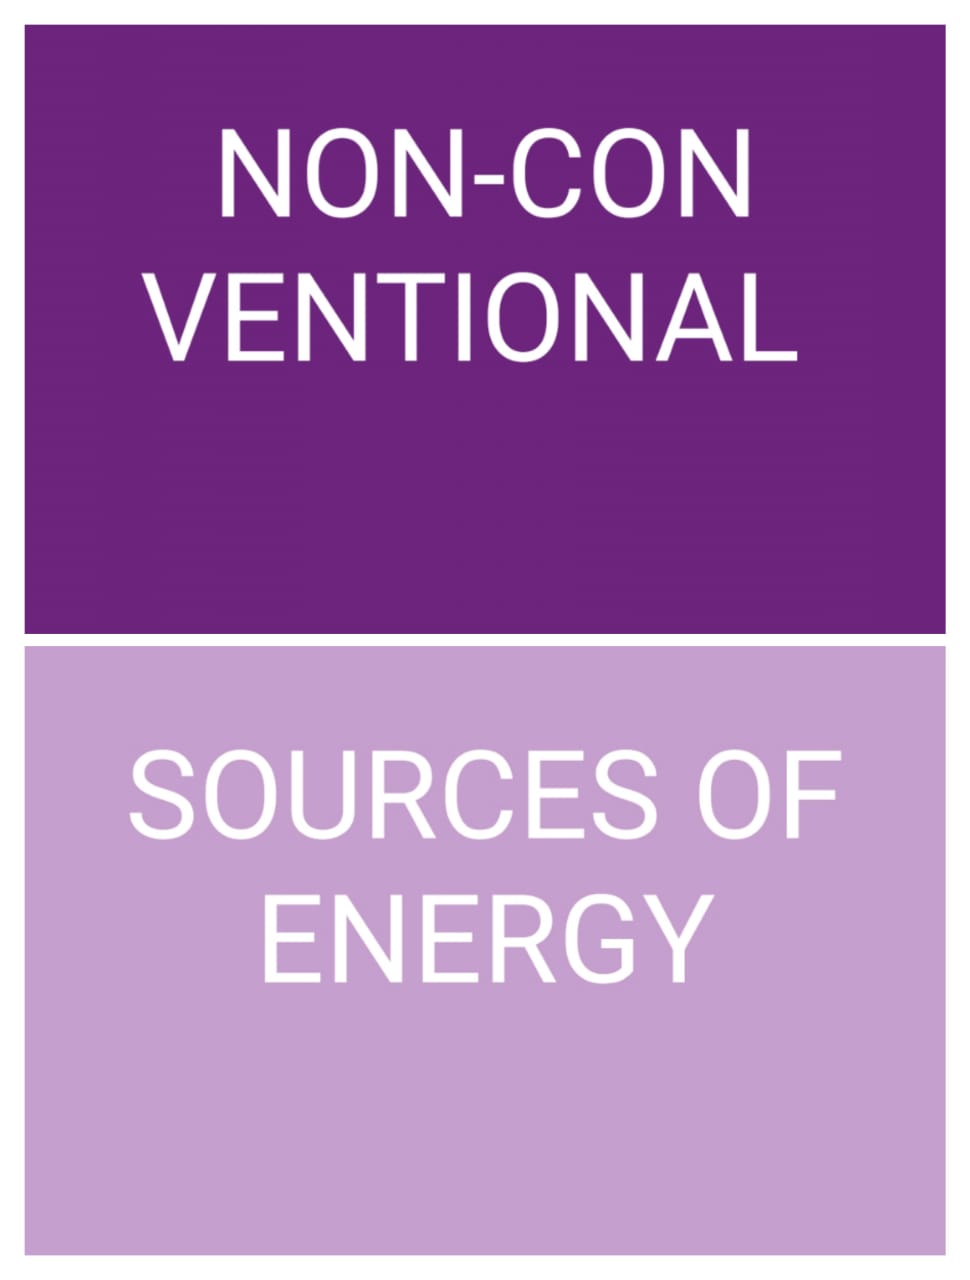 Alternative sources of energy